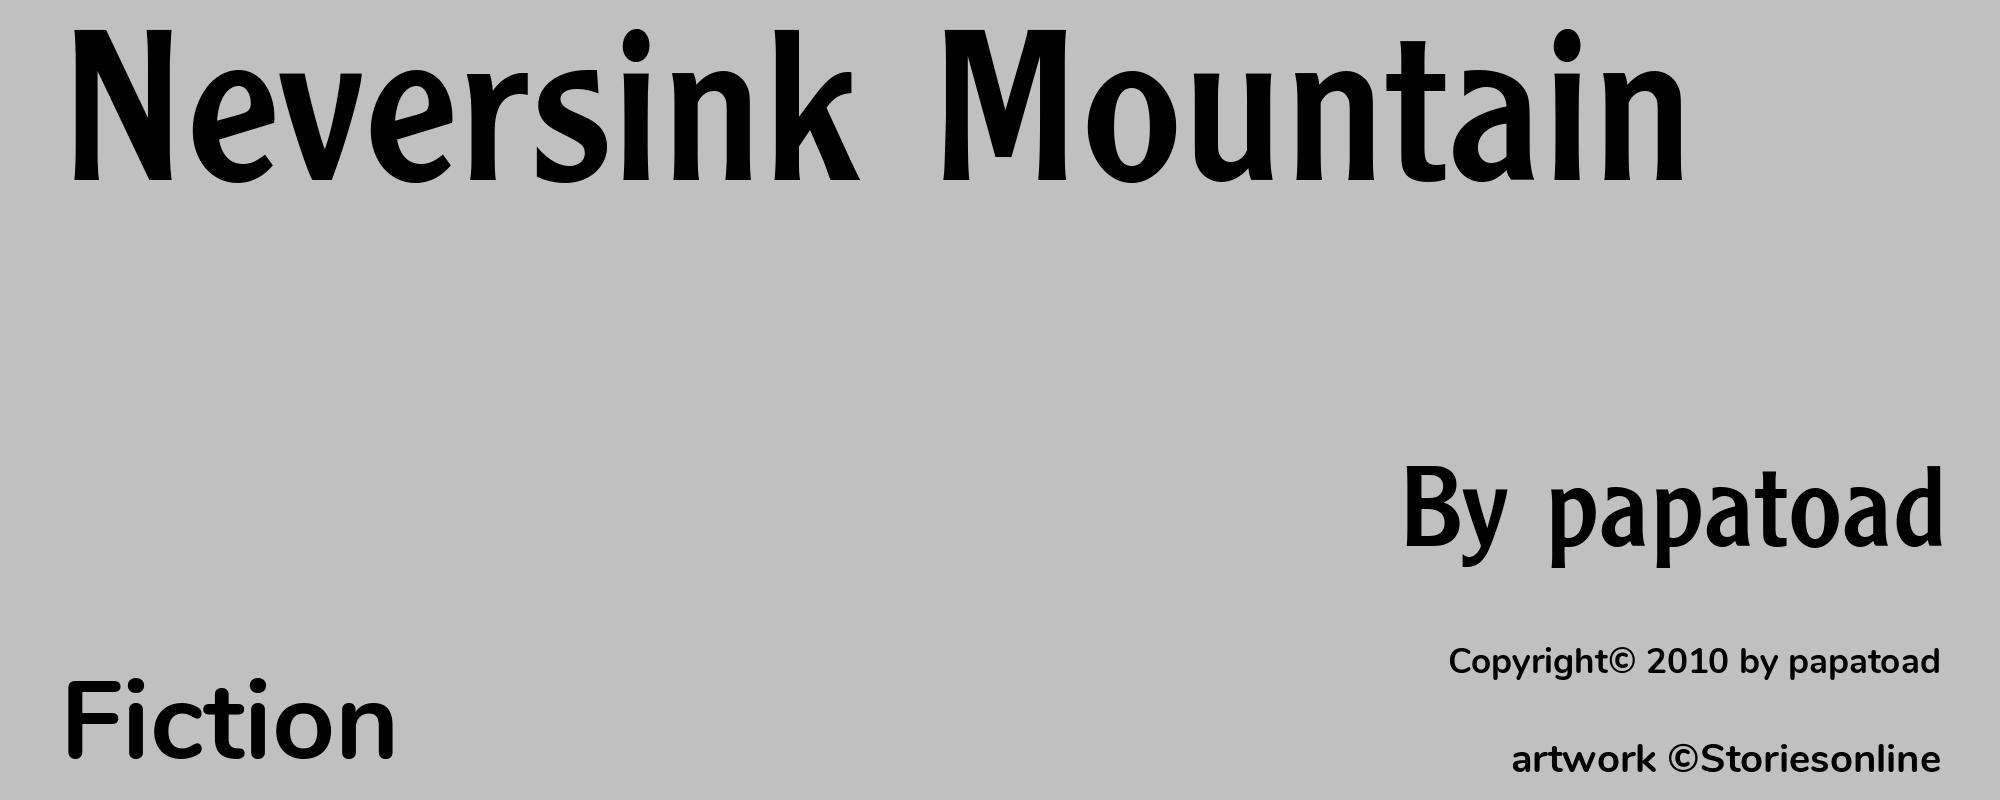 Neversink Mountain - Cover